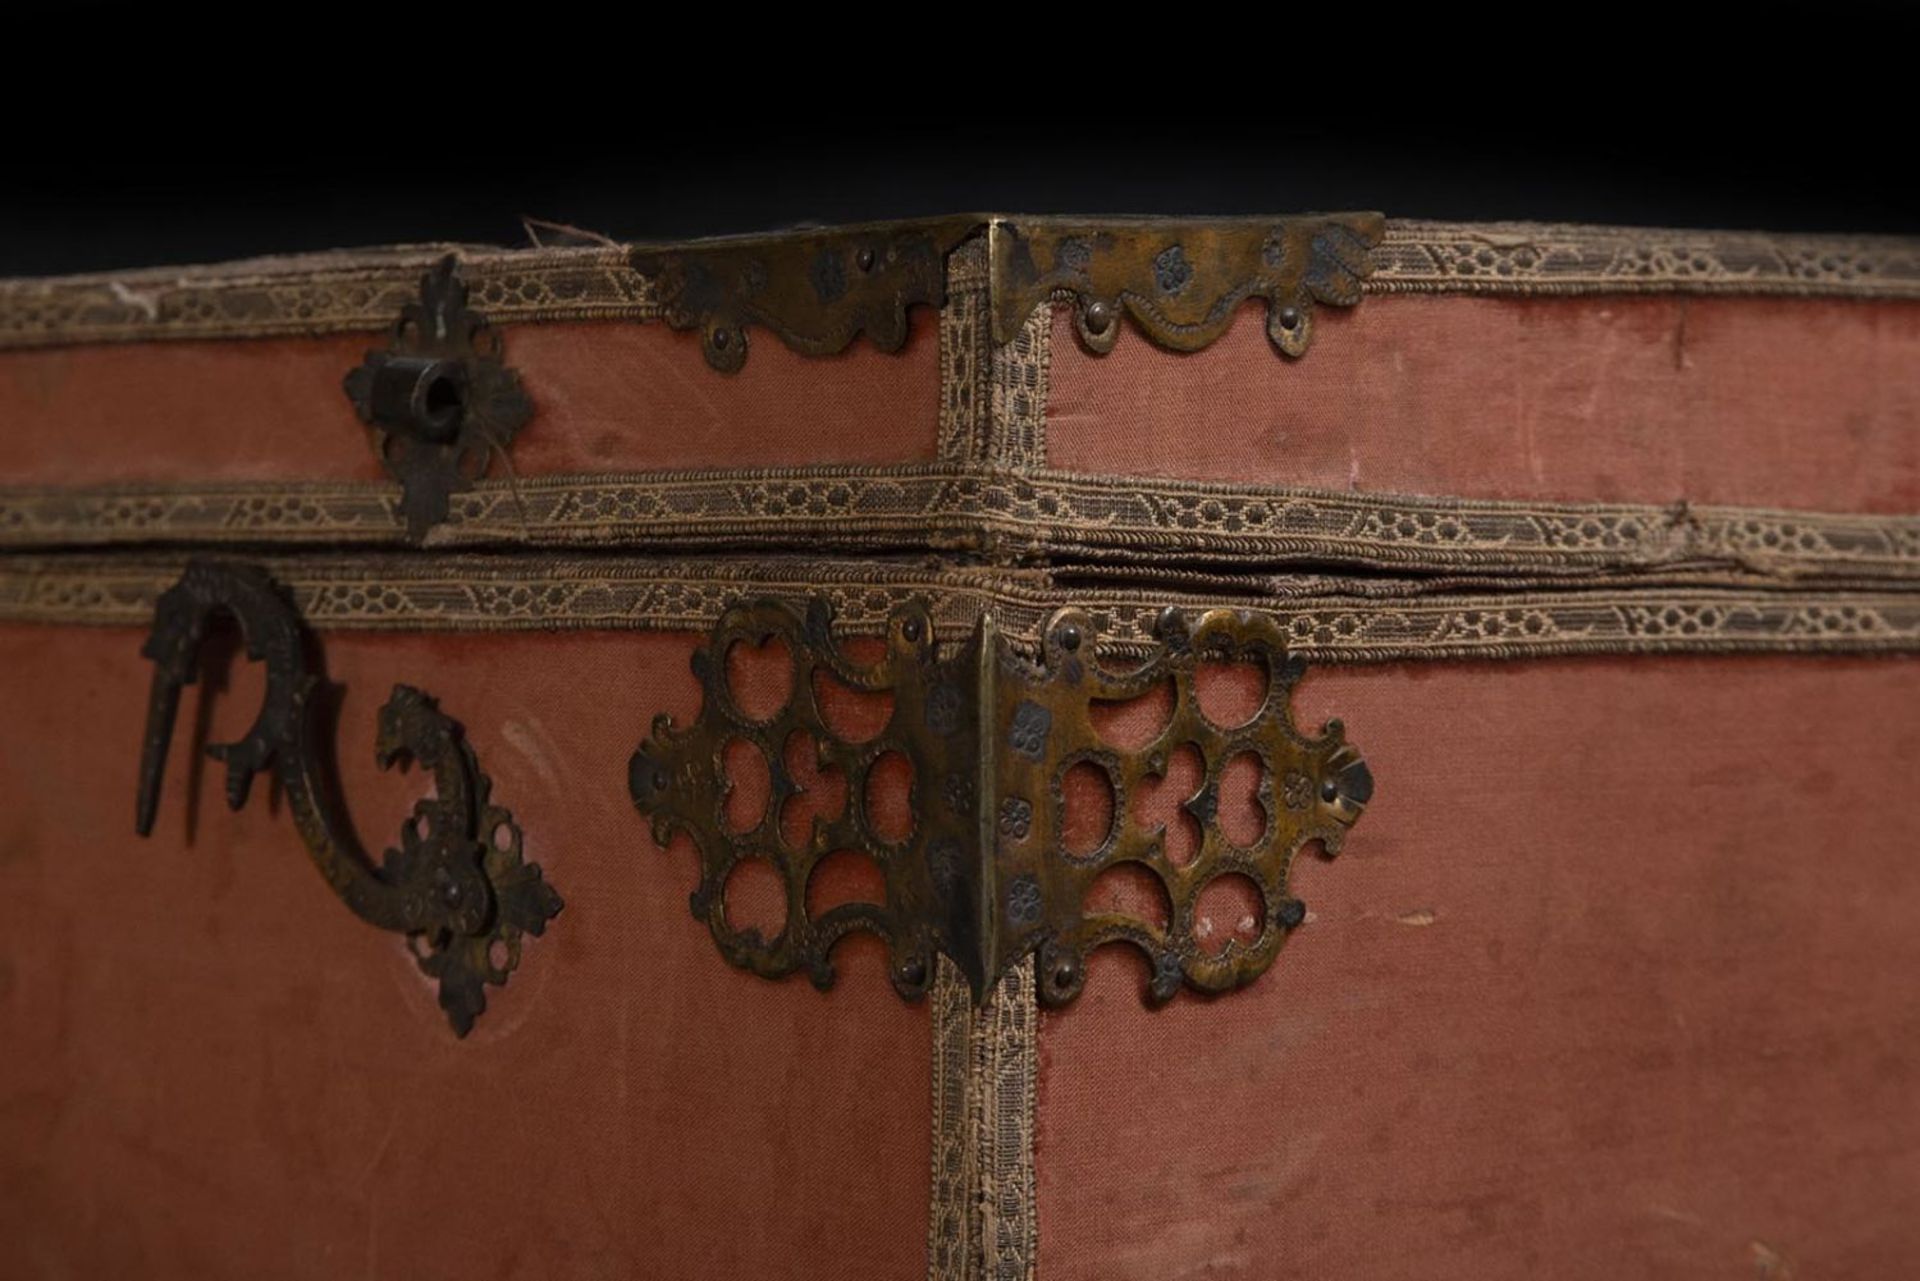 Important Large Medieval Velvet Chest, Catholic Monarchs Period, Granada, 15th century, Spain - Image 4 of 7